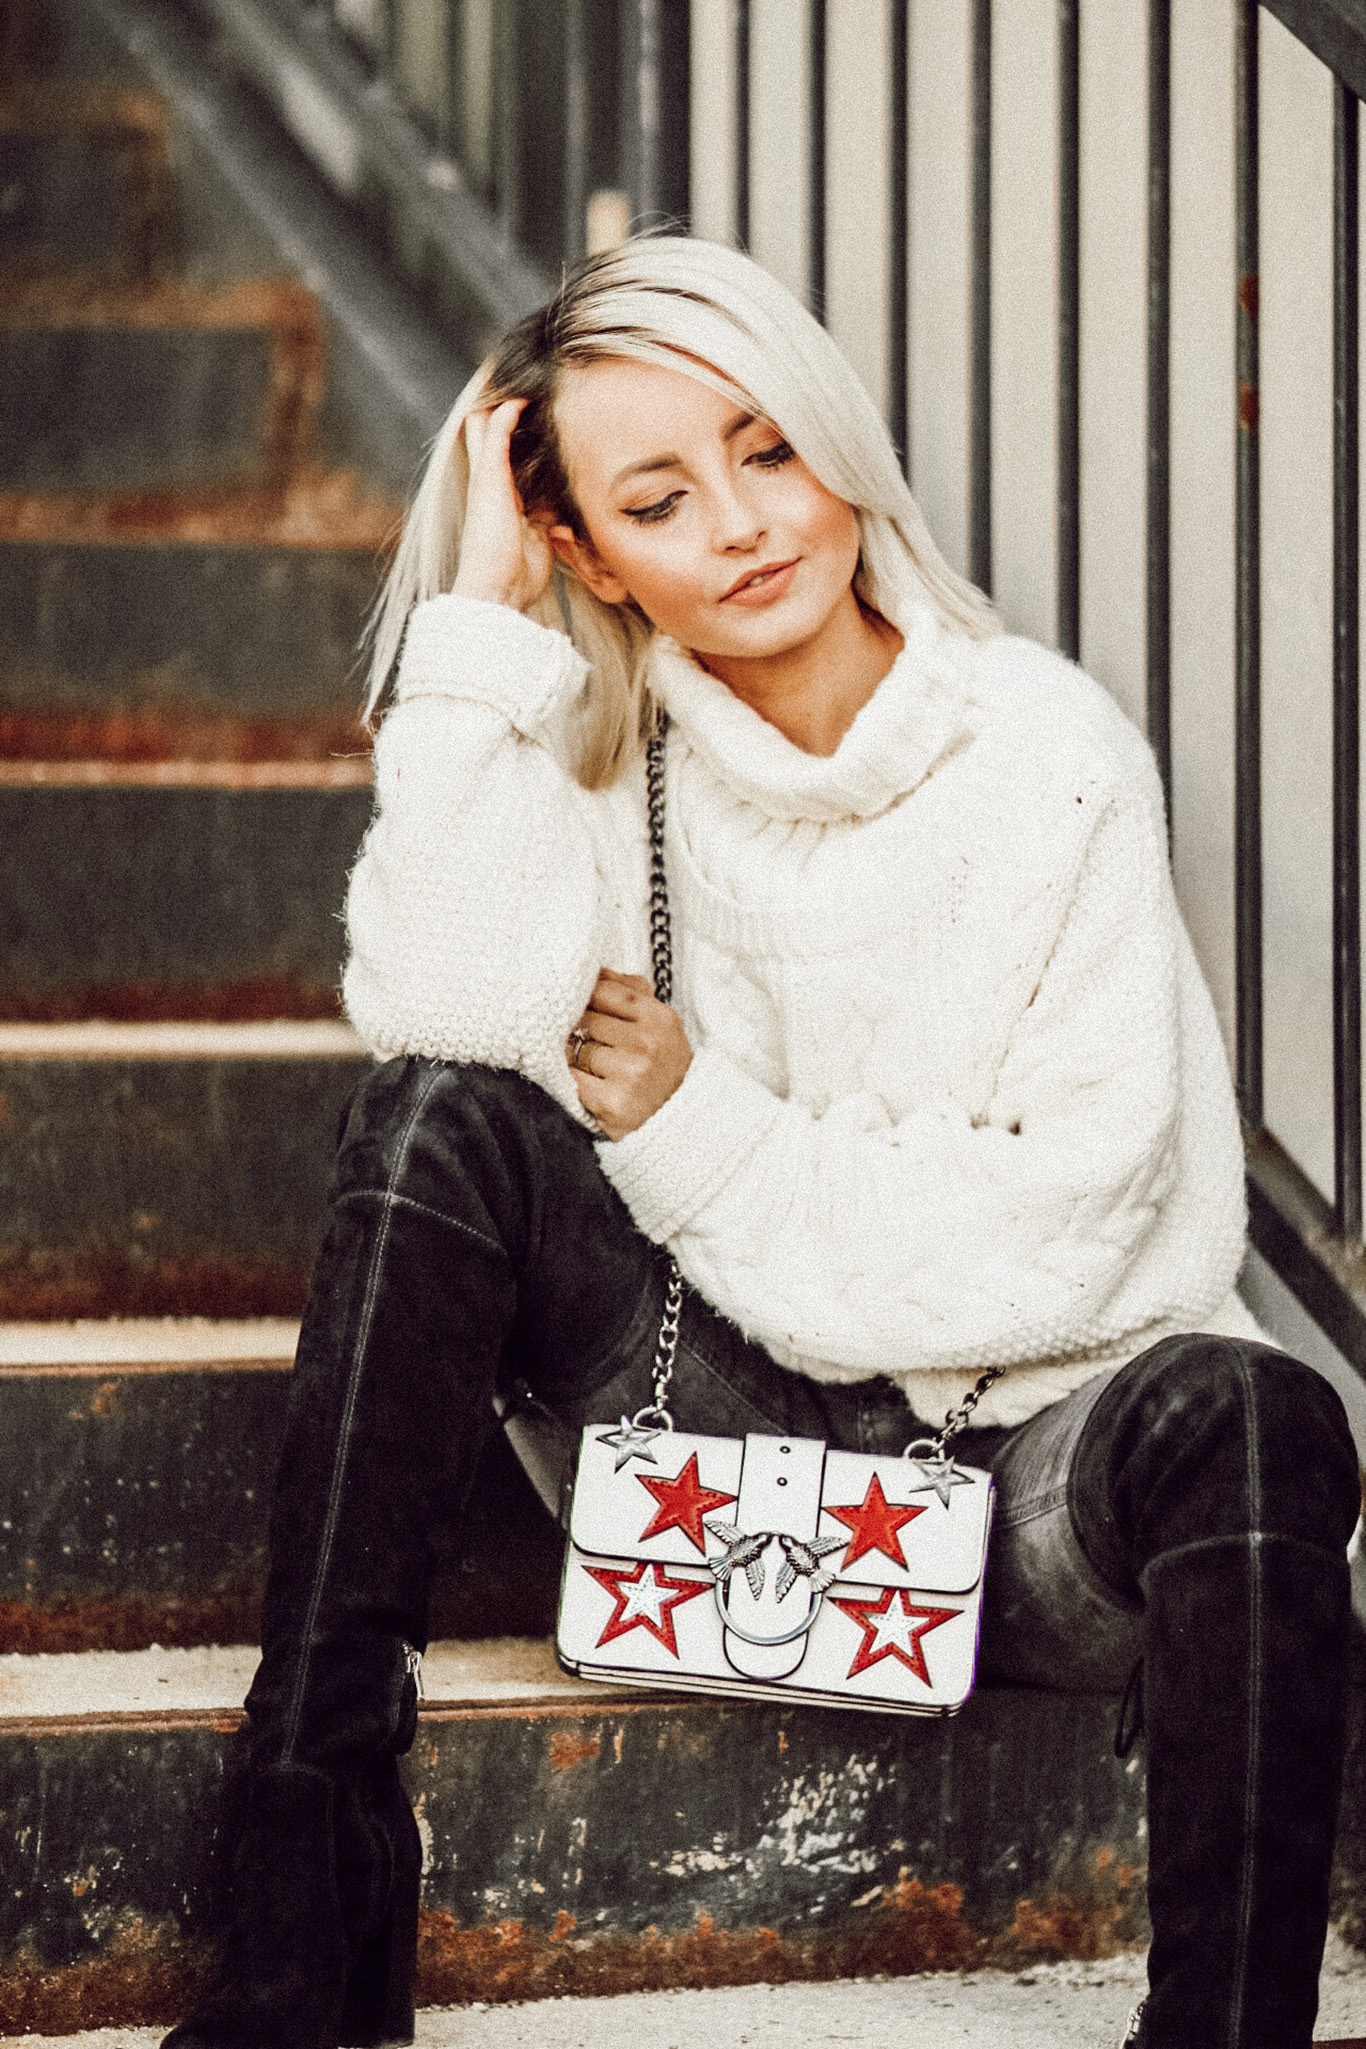 Alena Gidenko of modaprints.com shares her favorite cozy sweaters under $50 